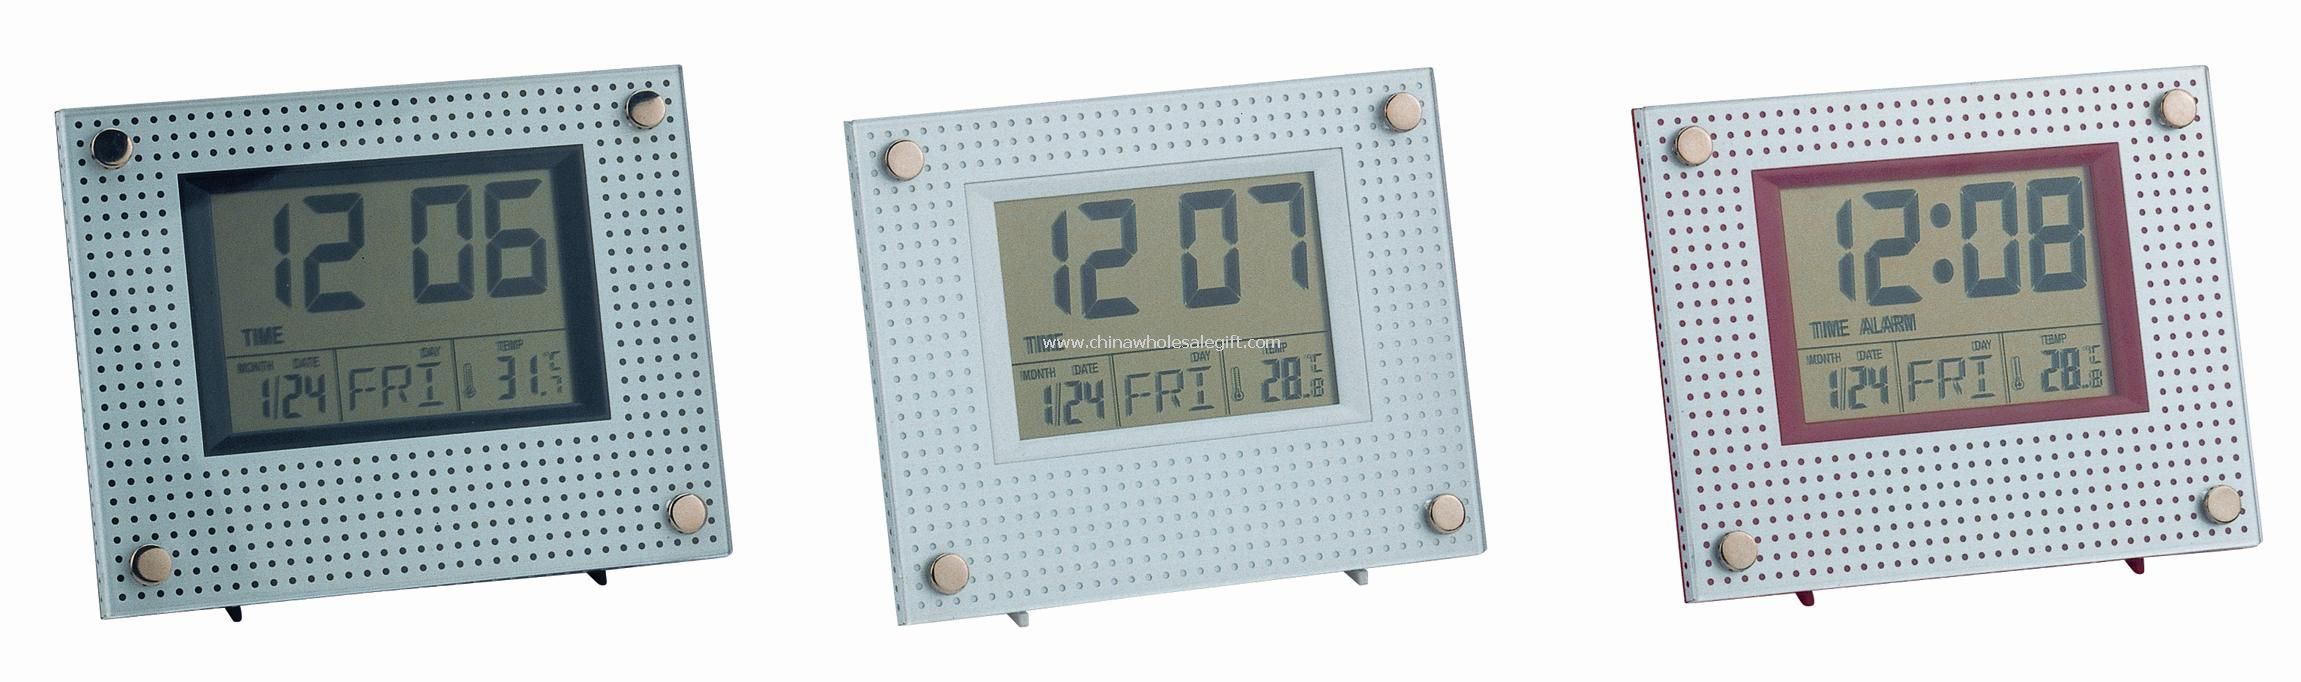 Large LCD Display Calendar Clock